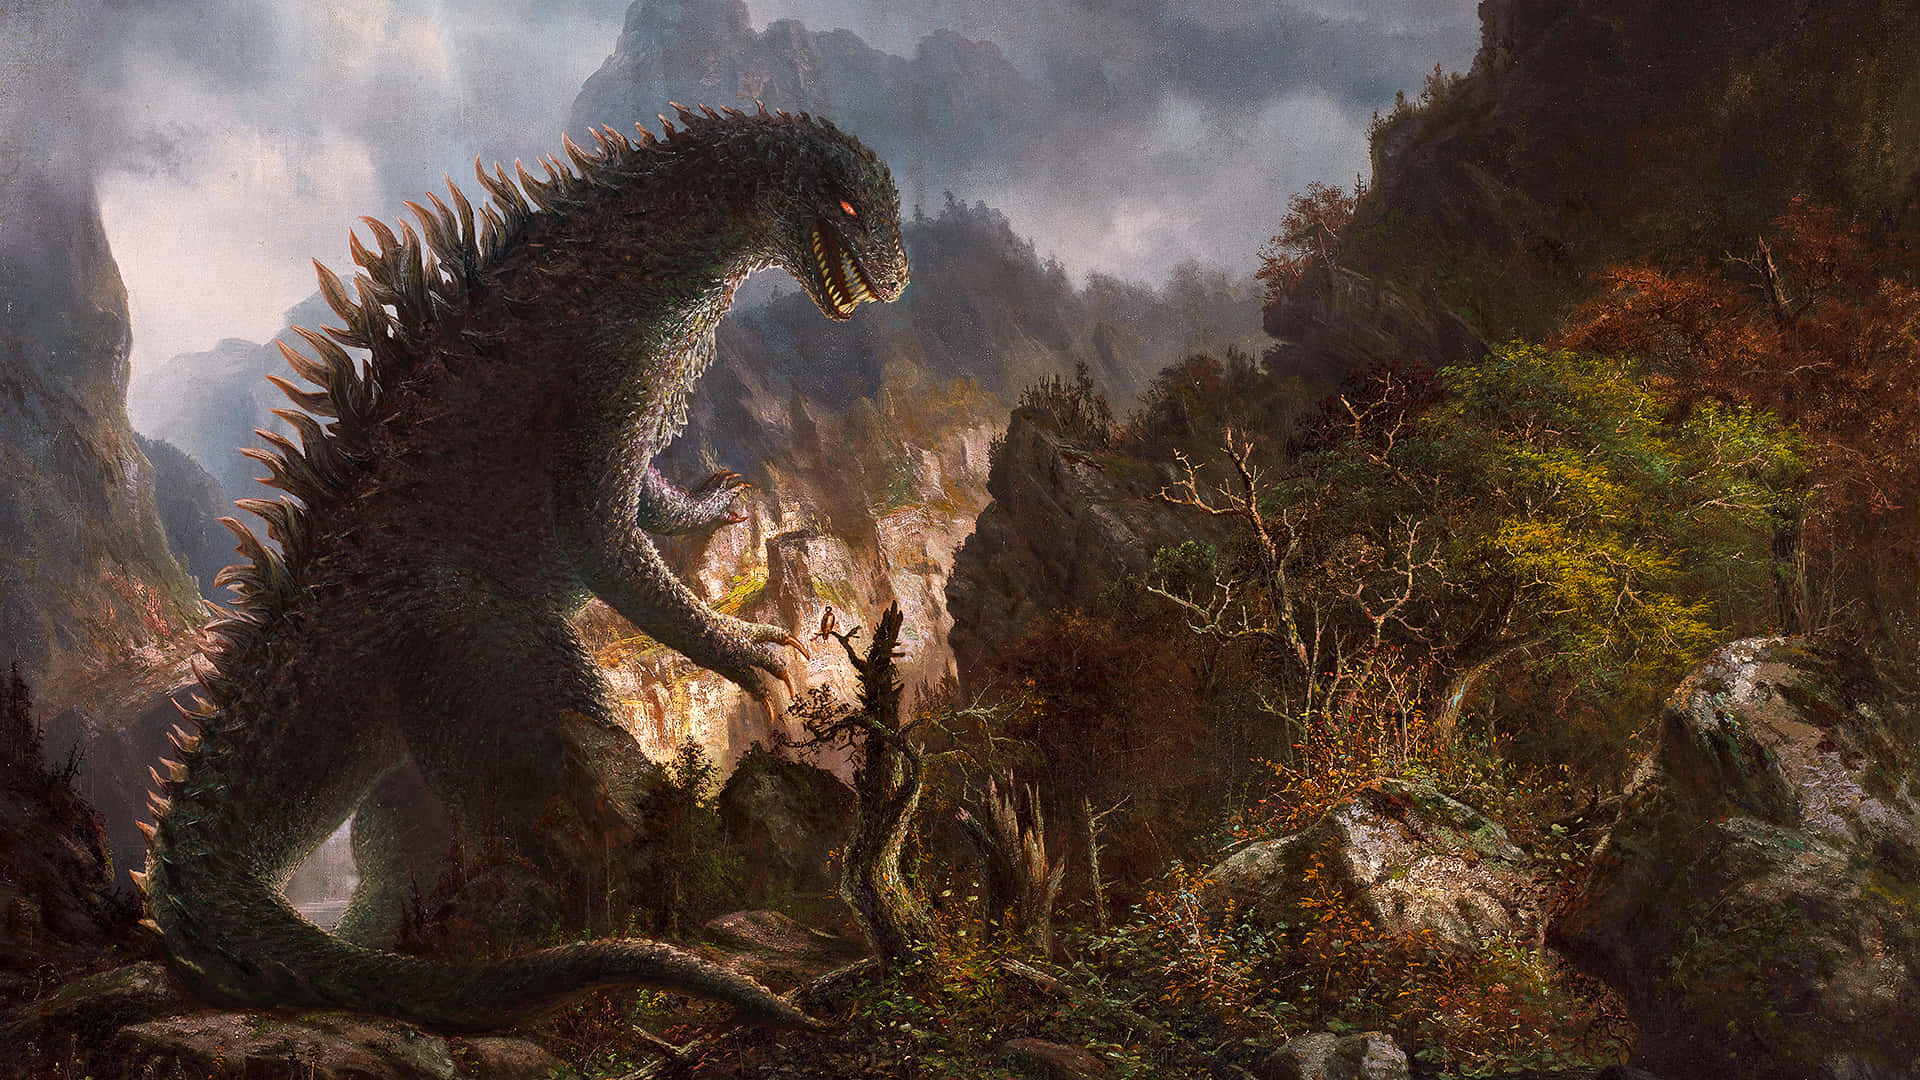 Imagende Arte De Godzilla En Un Bosque De Montaña.